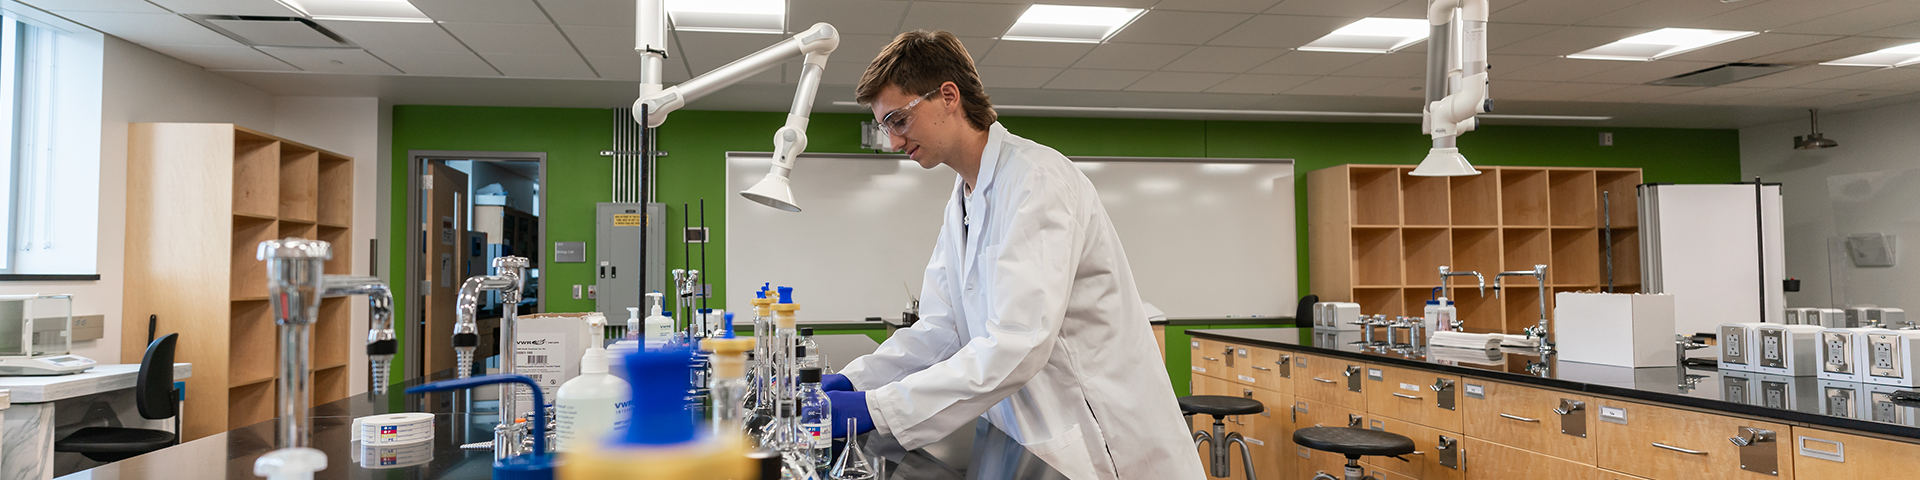 Male student in white lab coat handling laboratory equipment.